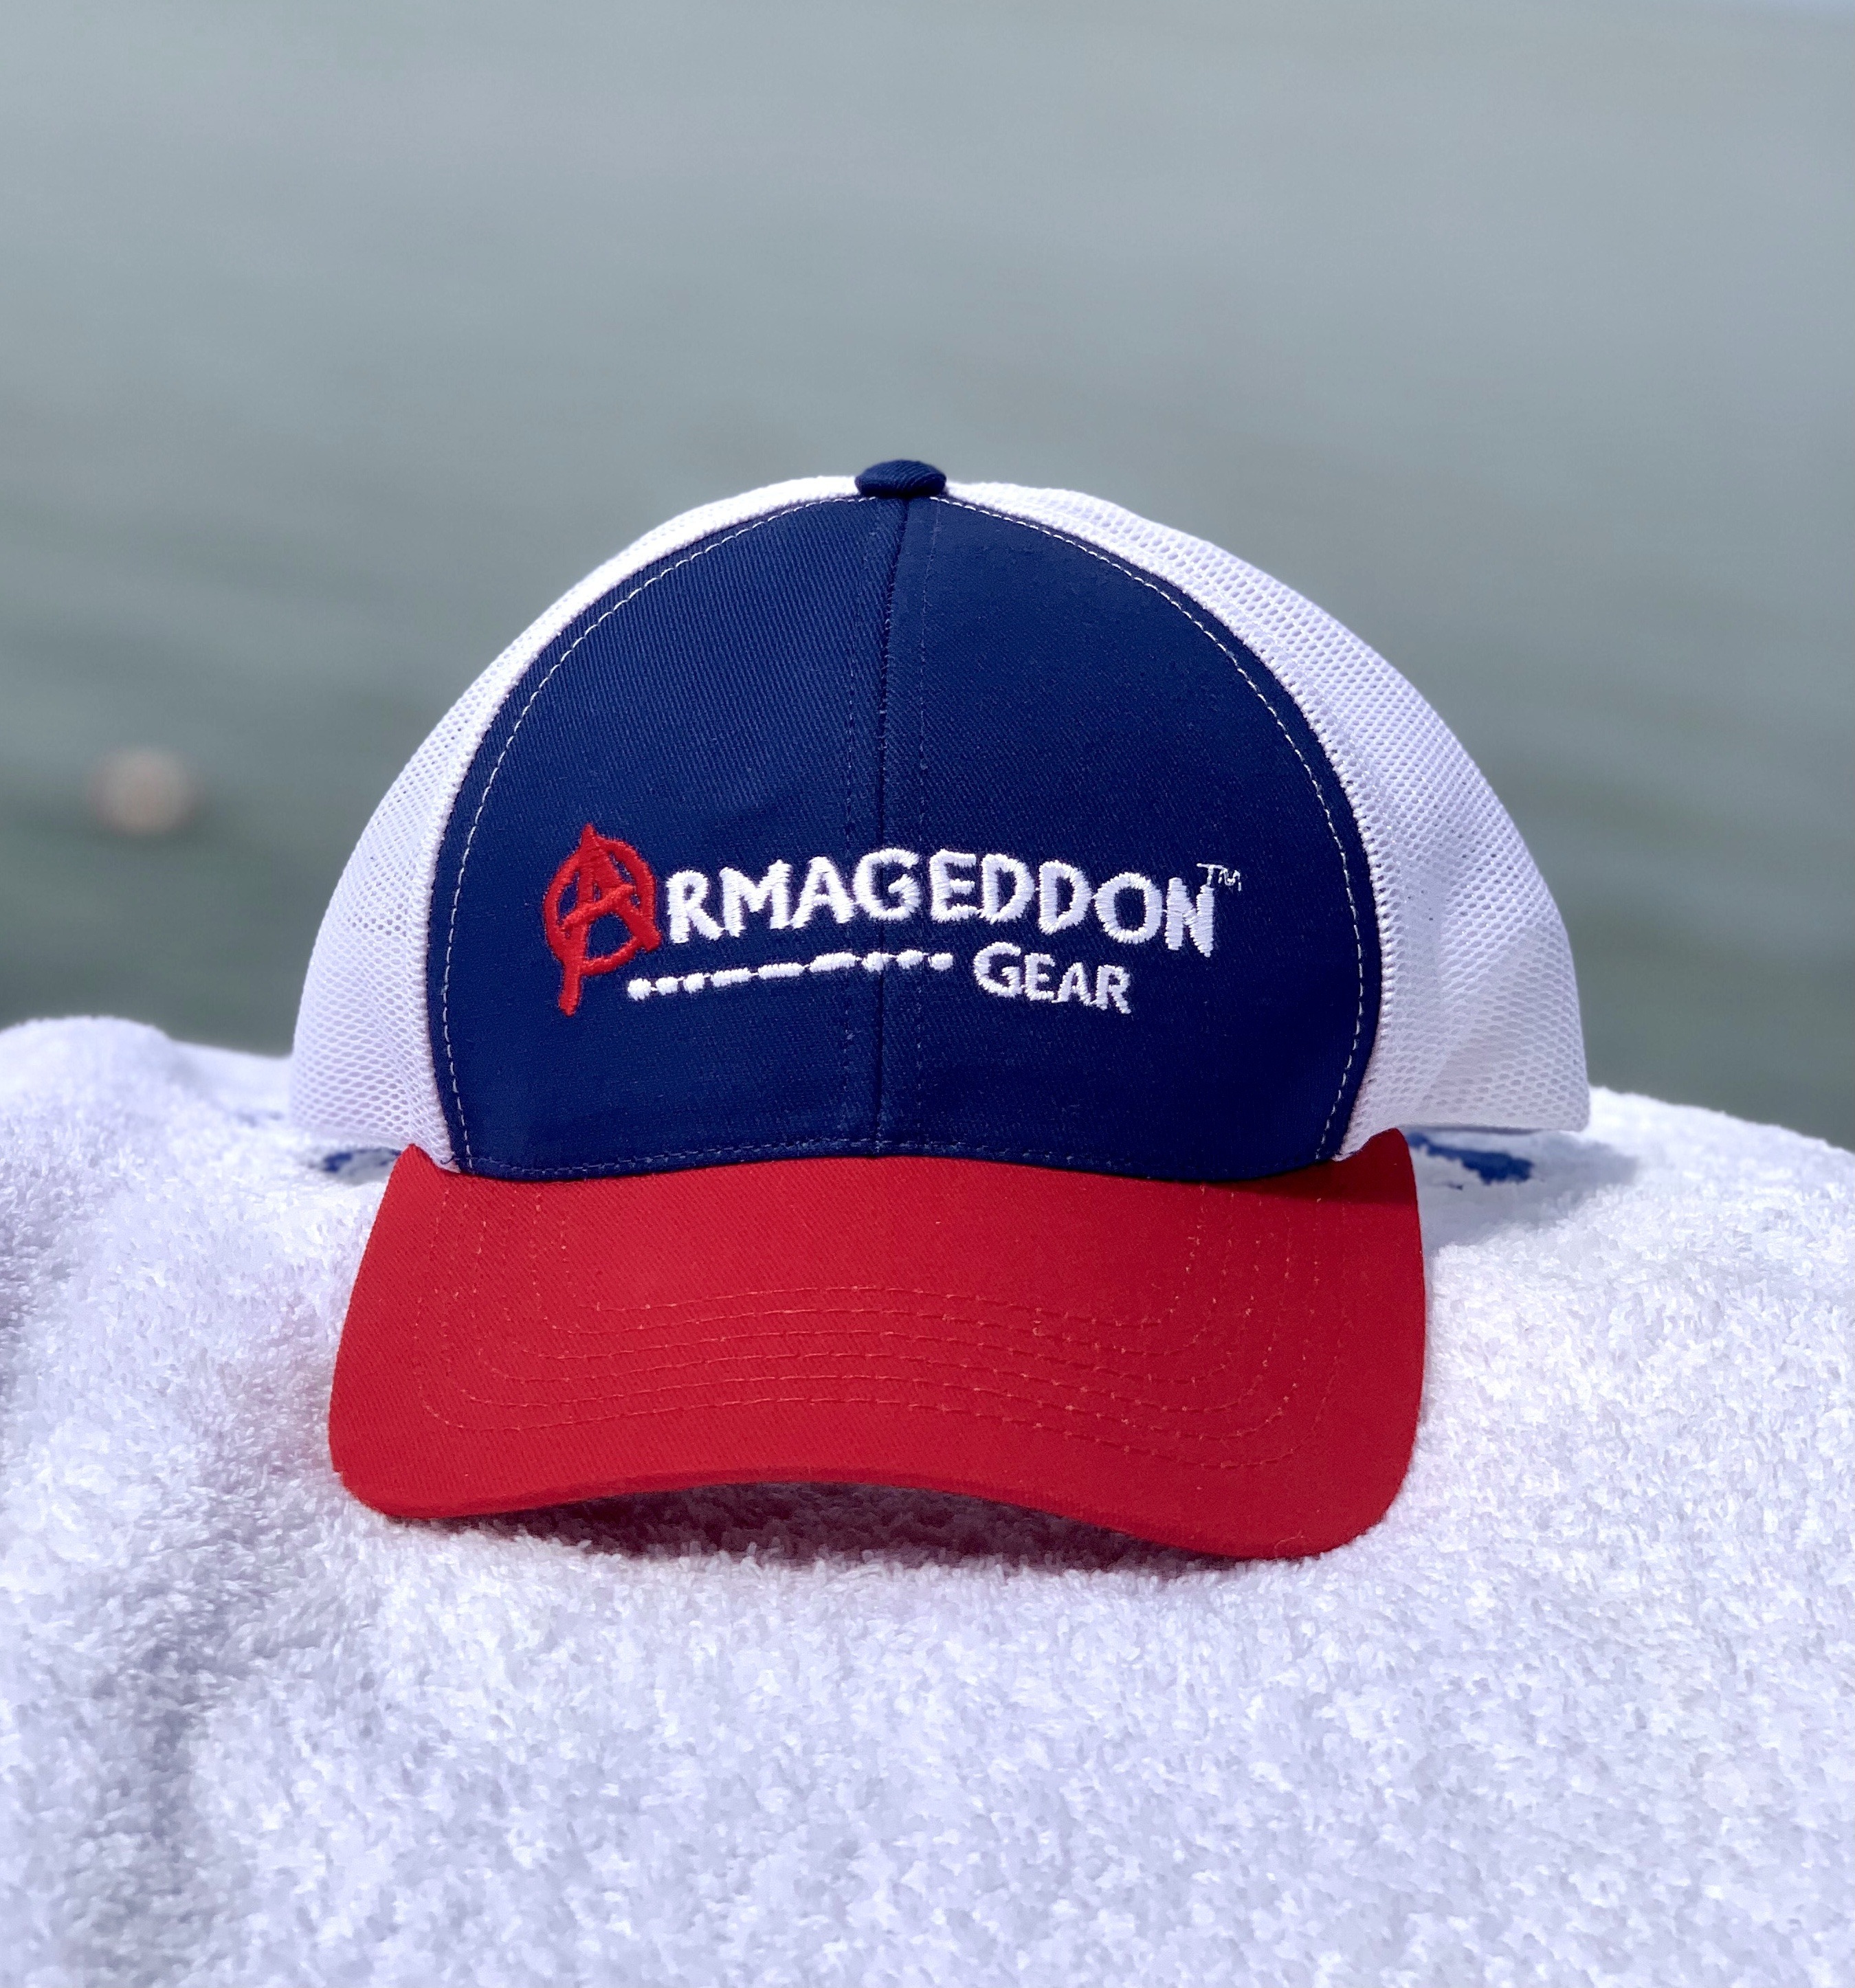 Armageddon Gear Logo Cap with Mesh Back